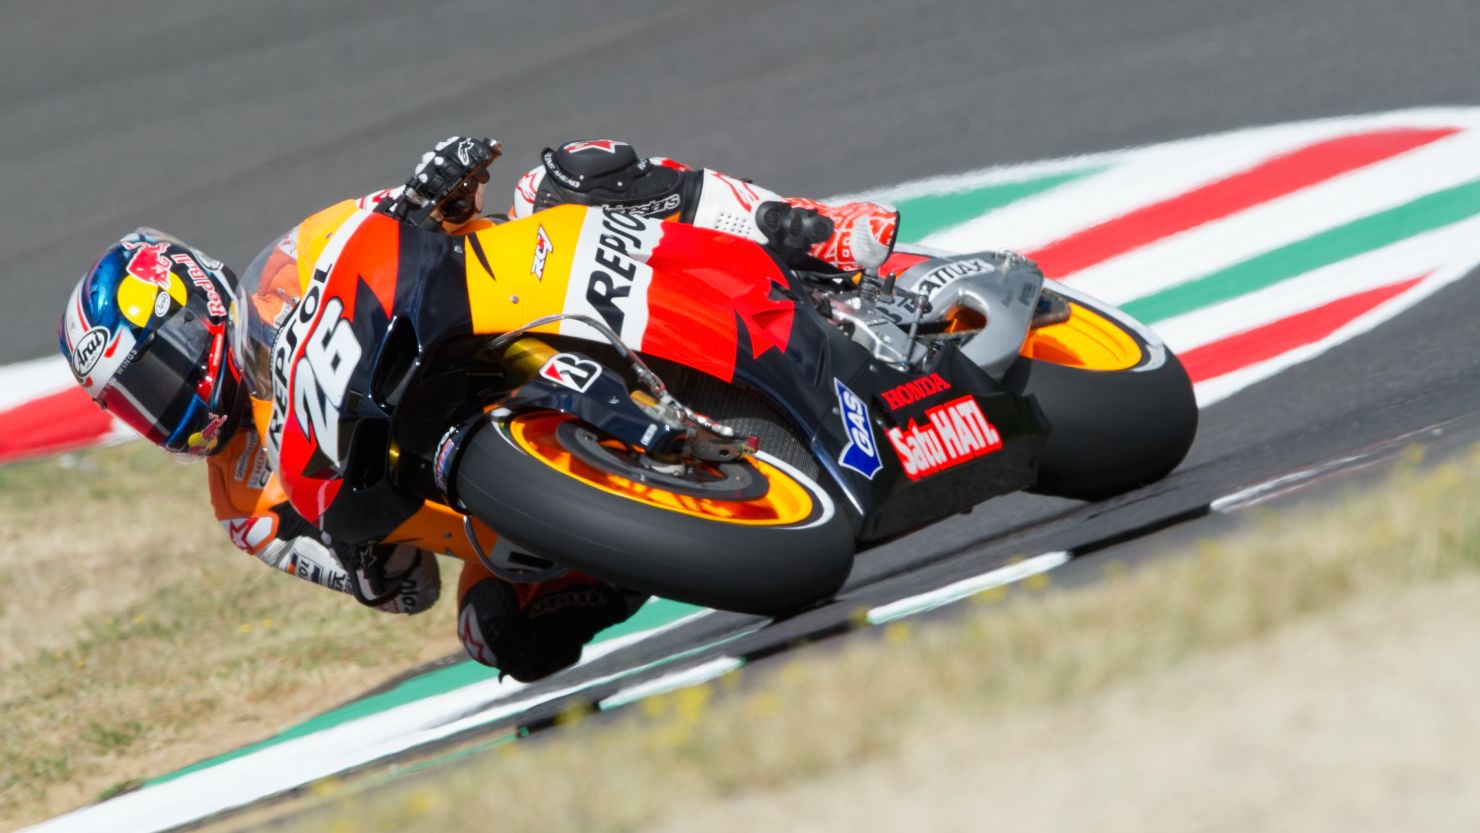 Dani Pedrosa qualified fastest on his Repsol Honda for the Italian MotoGP at Mugello.